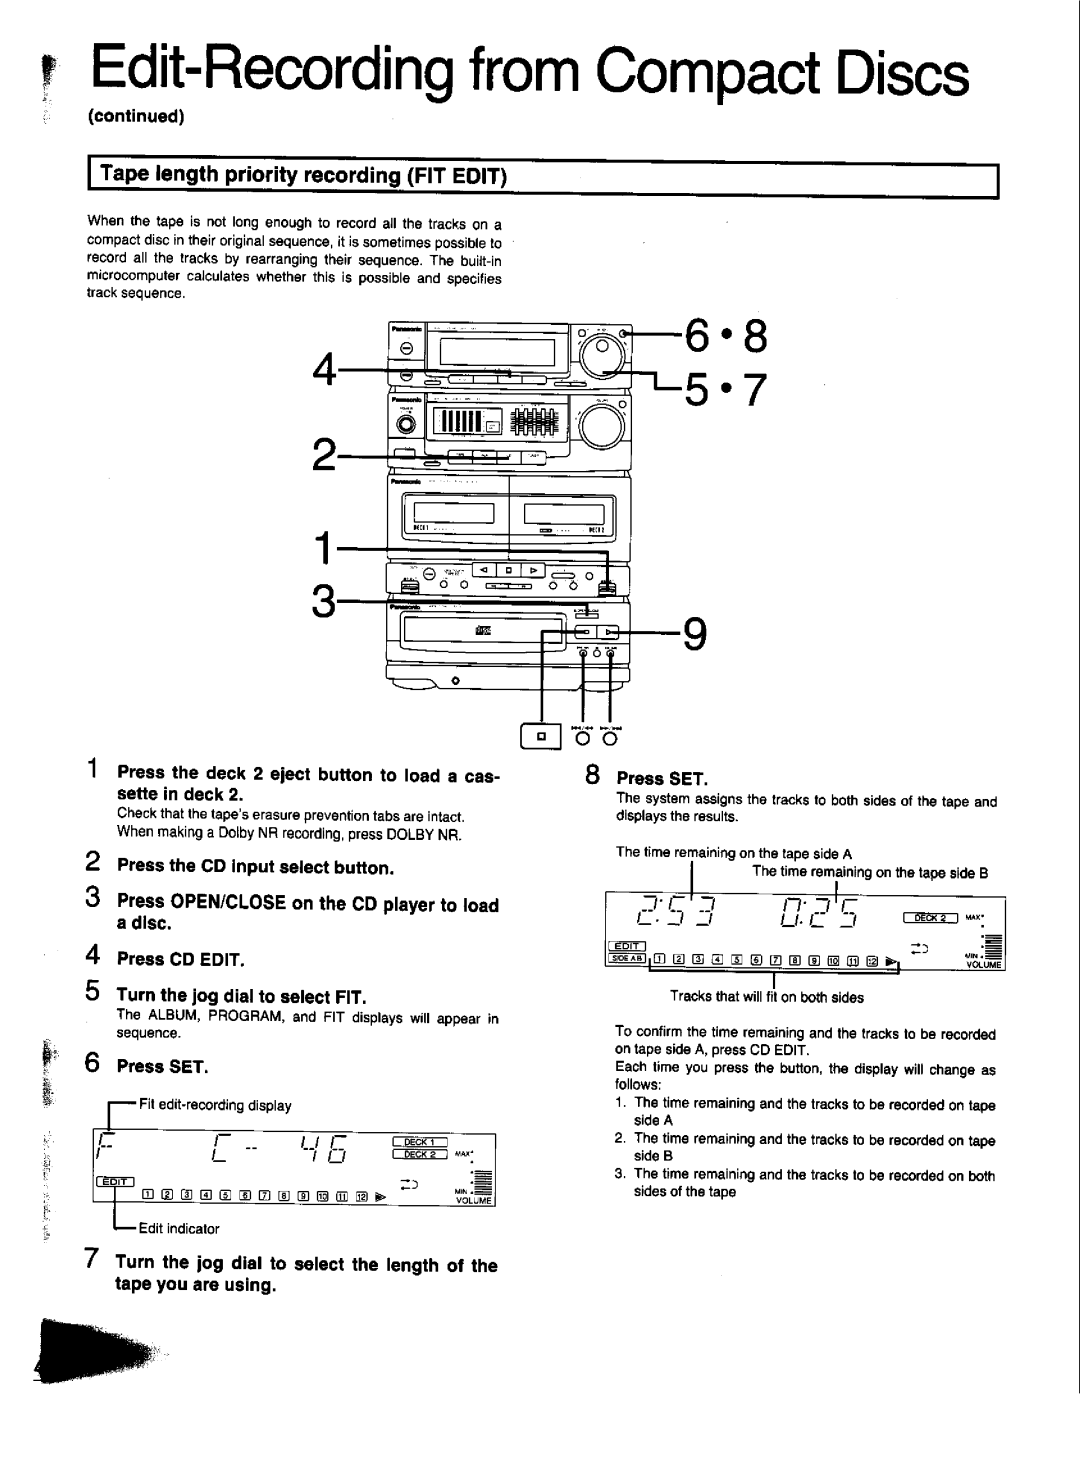 Panasonic SC-CH33 manual 